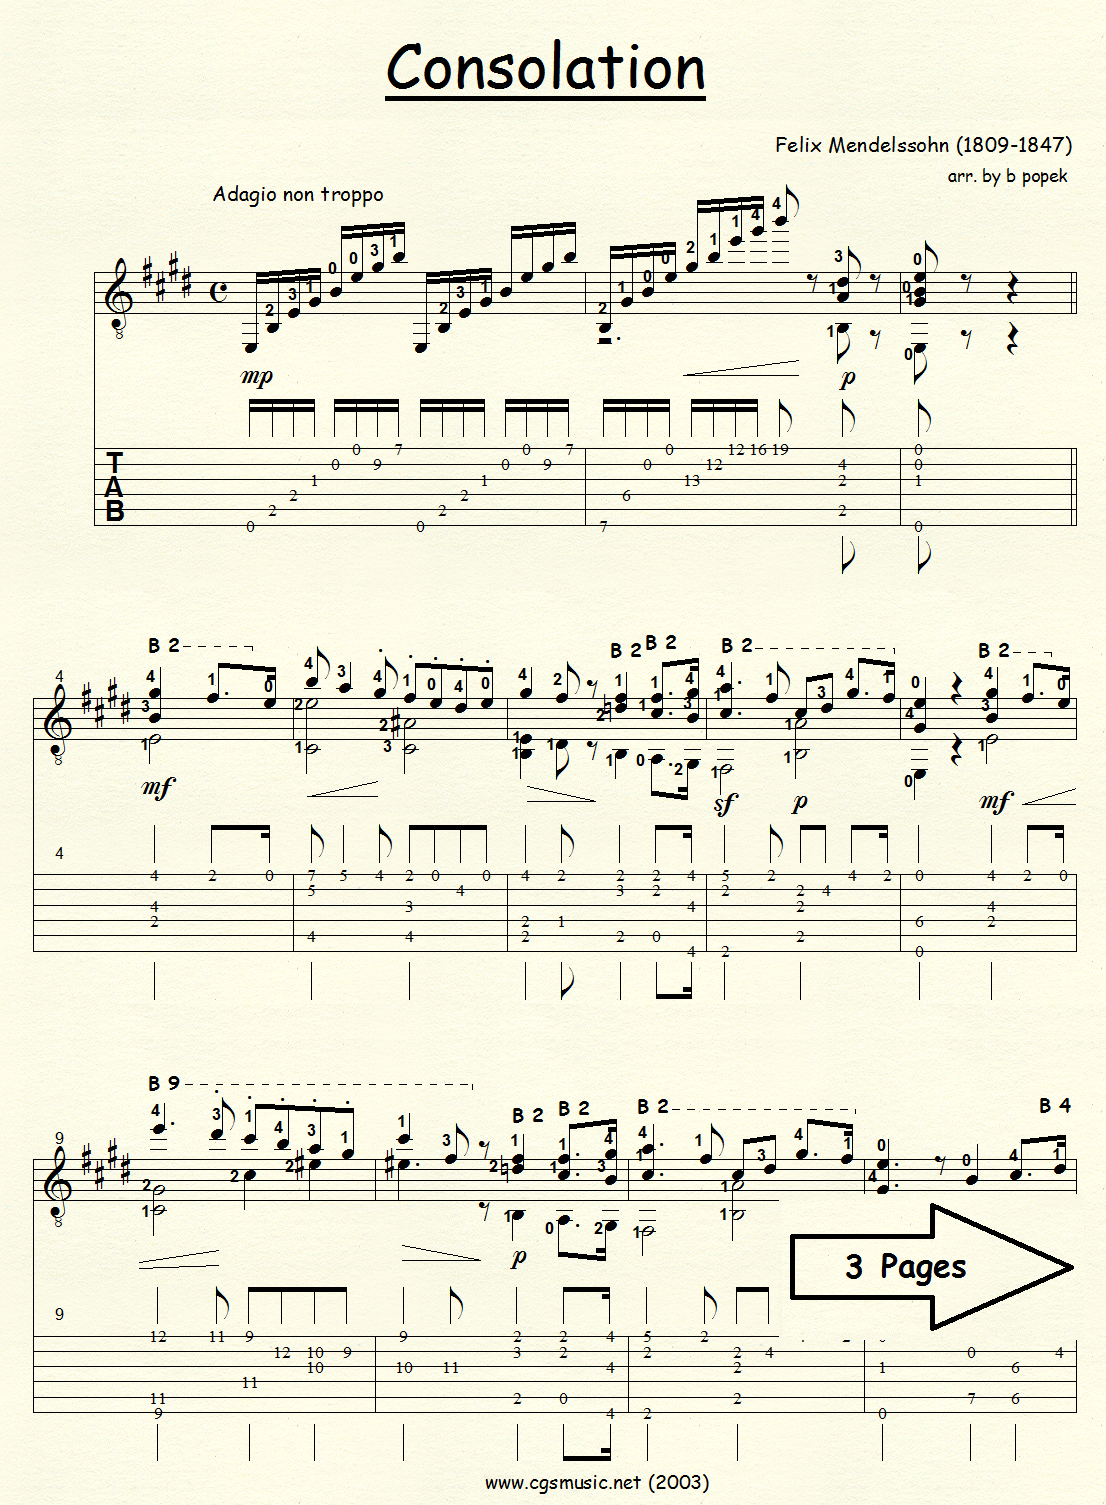 Consolation (Mendelssohn) for Classical Guitar in Tablature